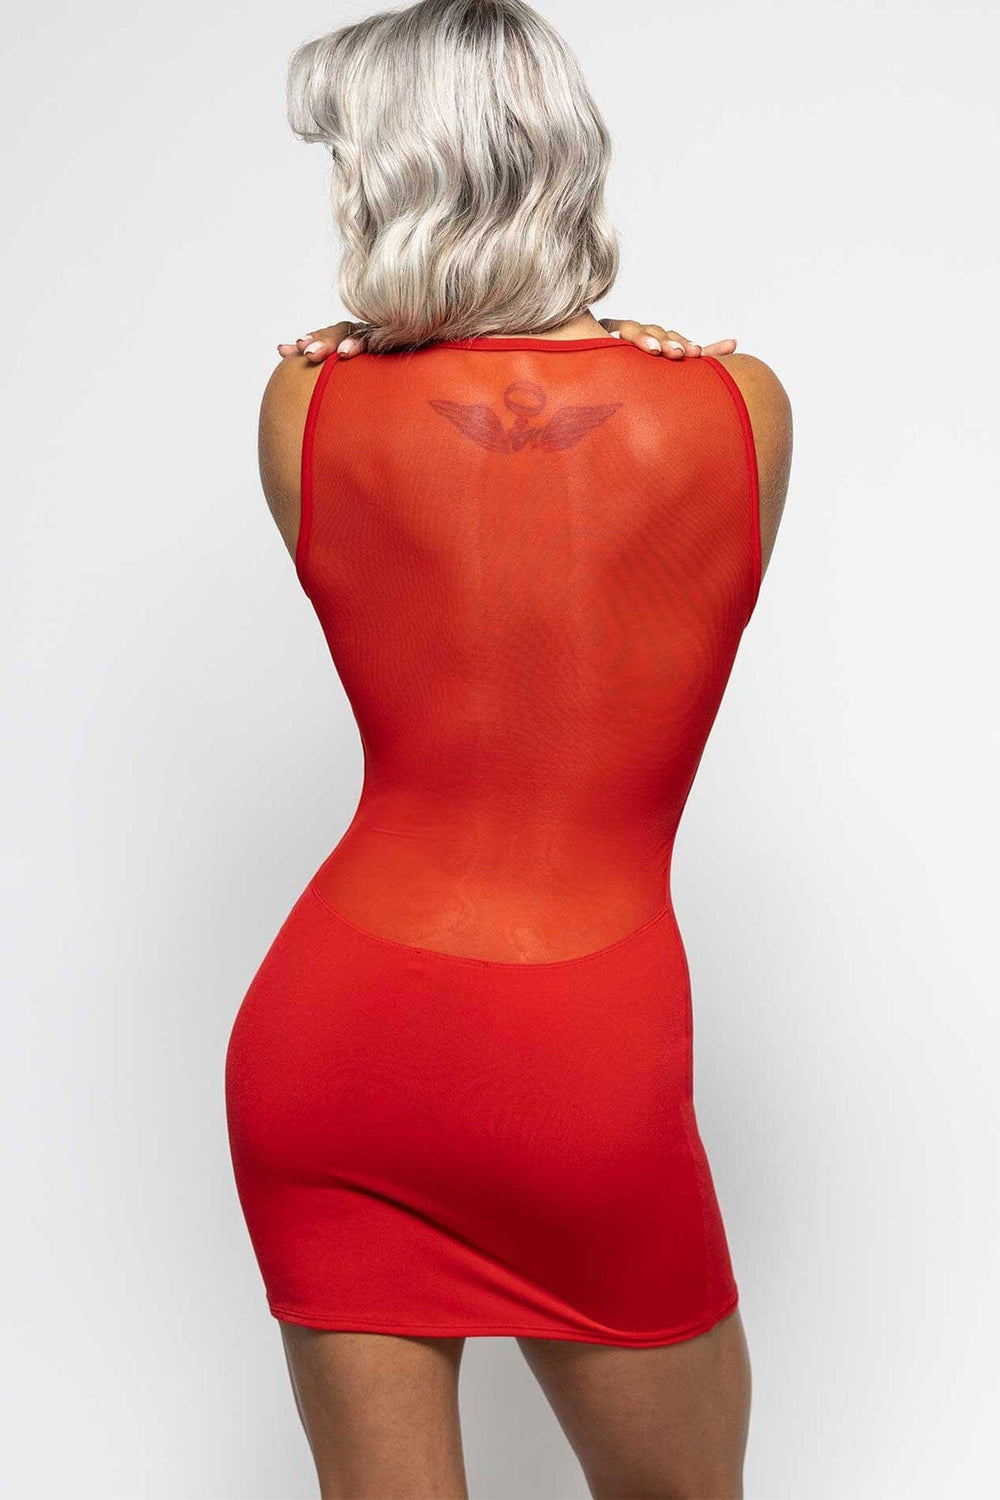 Ophelia Red Lycra Dress-Edgy Dresses-Les P'tites Folies-SEXYSHOES.COM